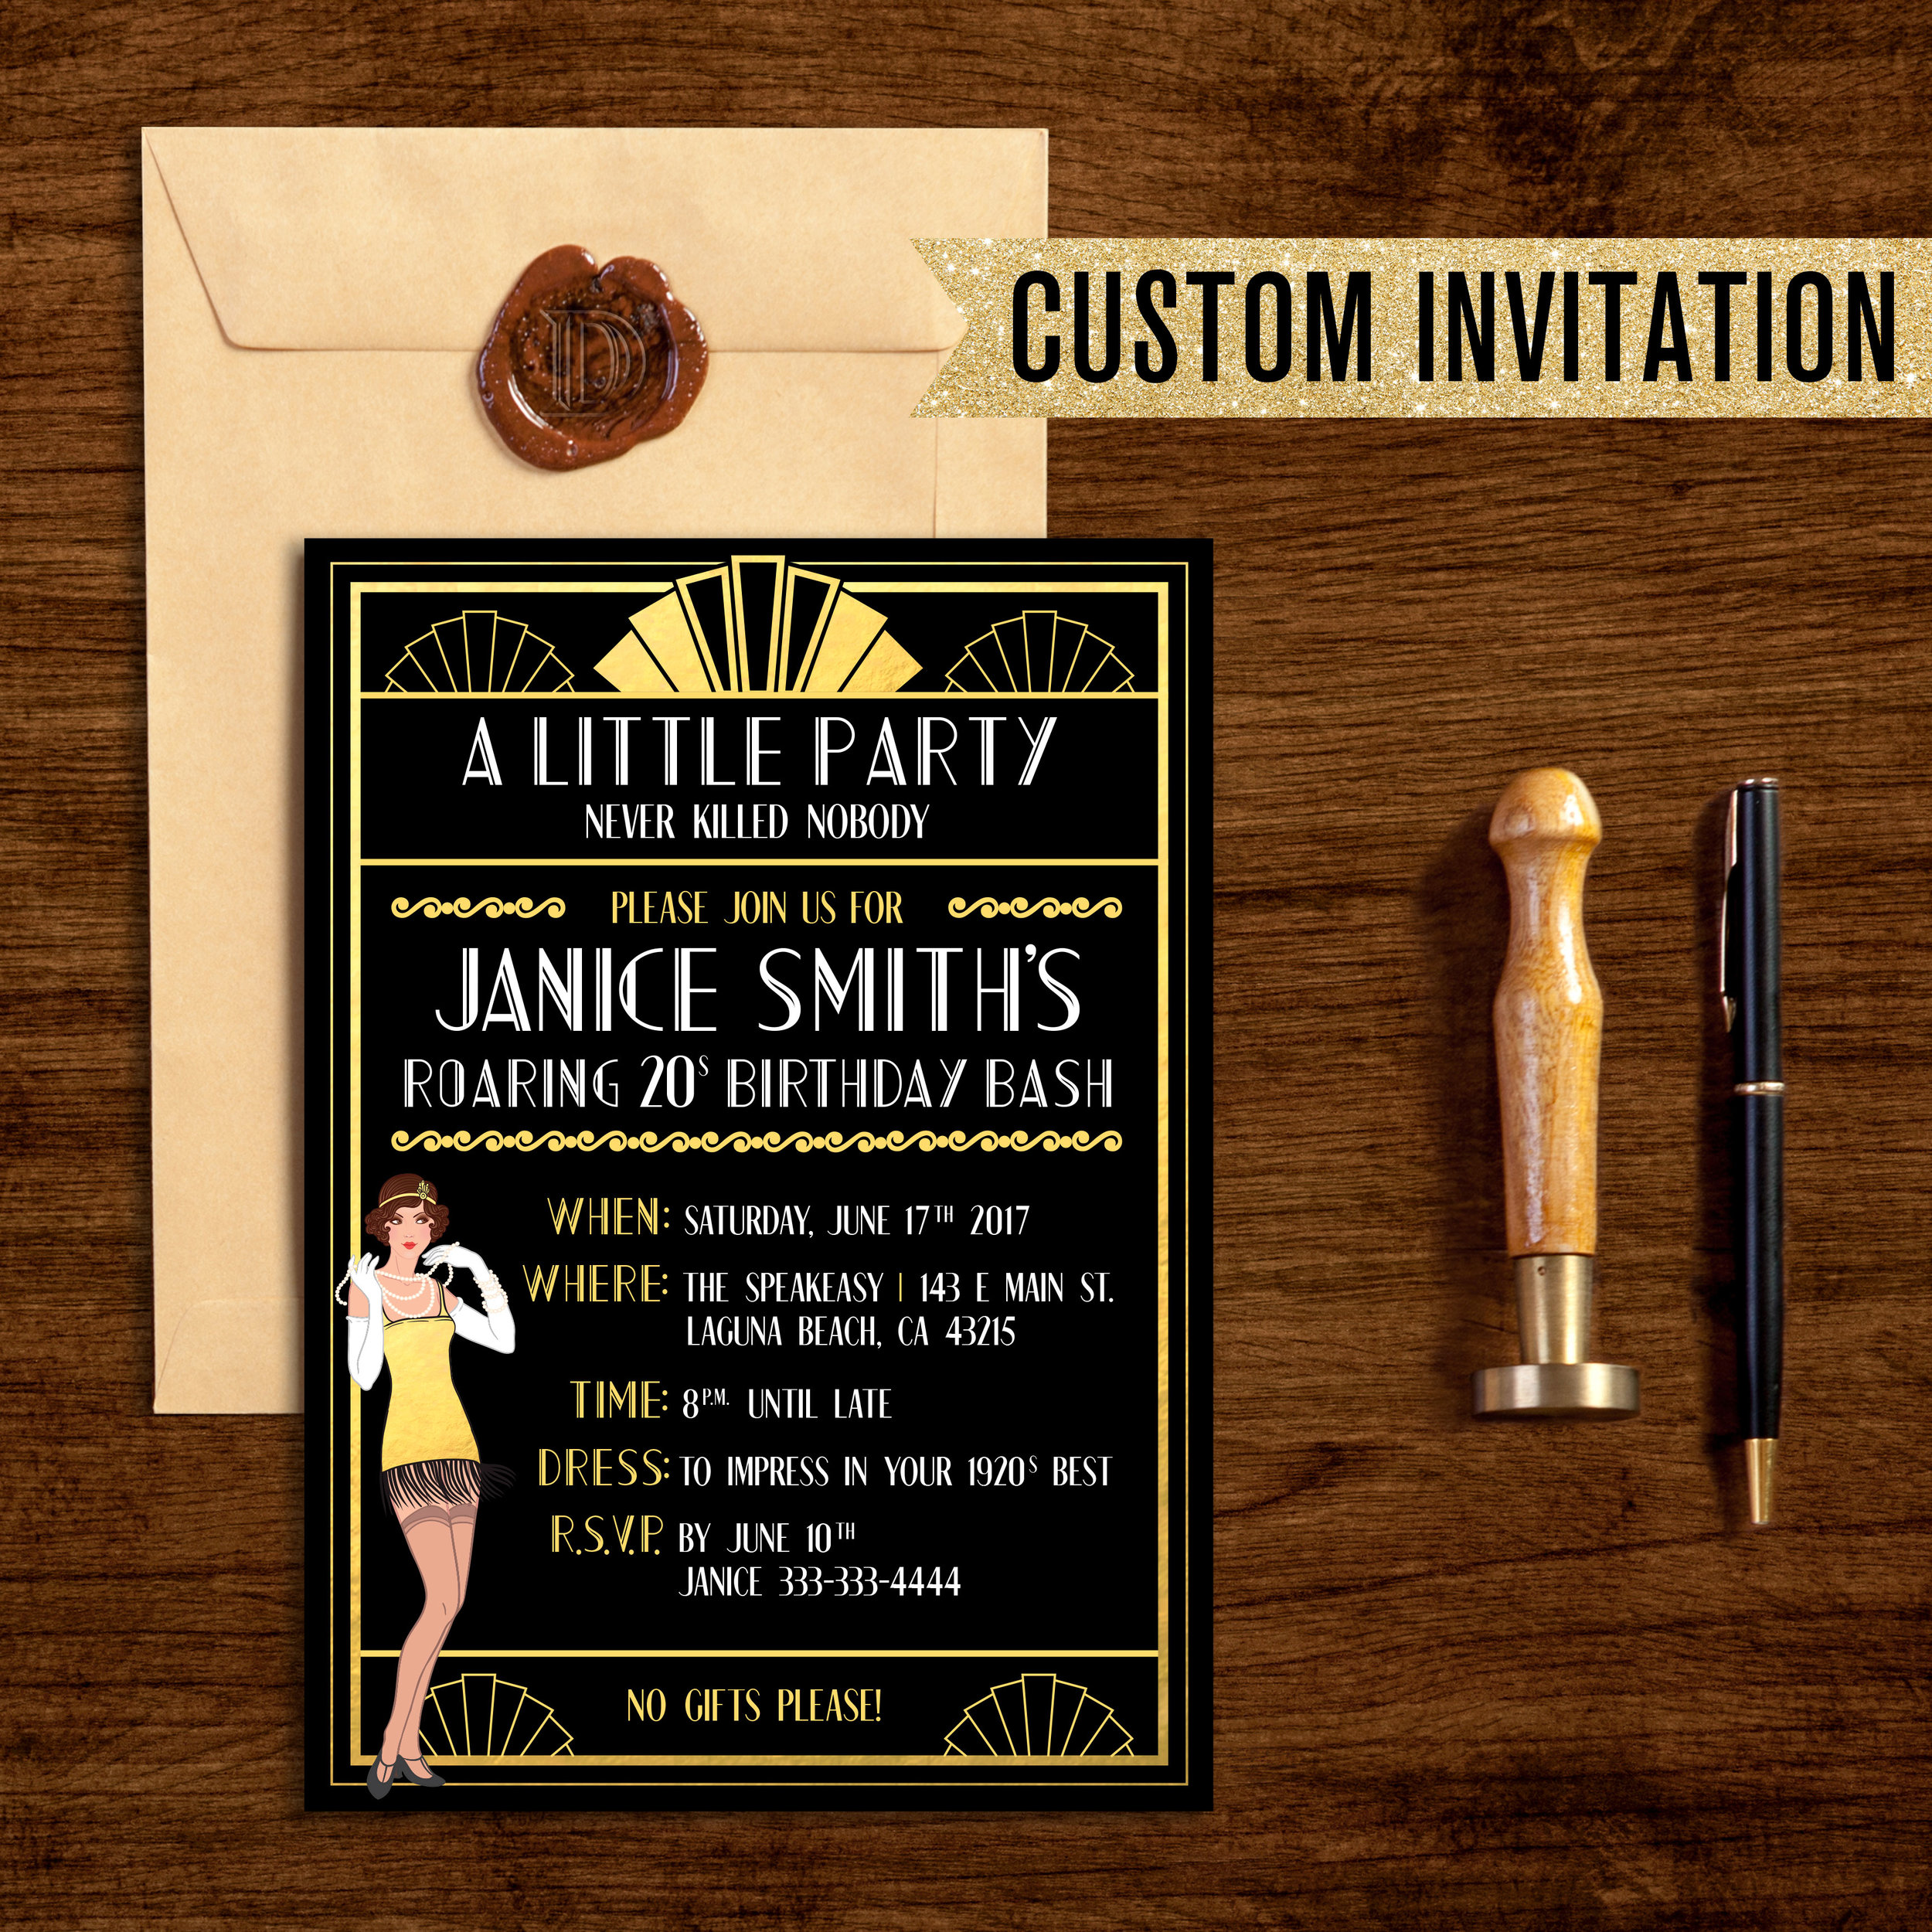 Custom Invitation